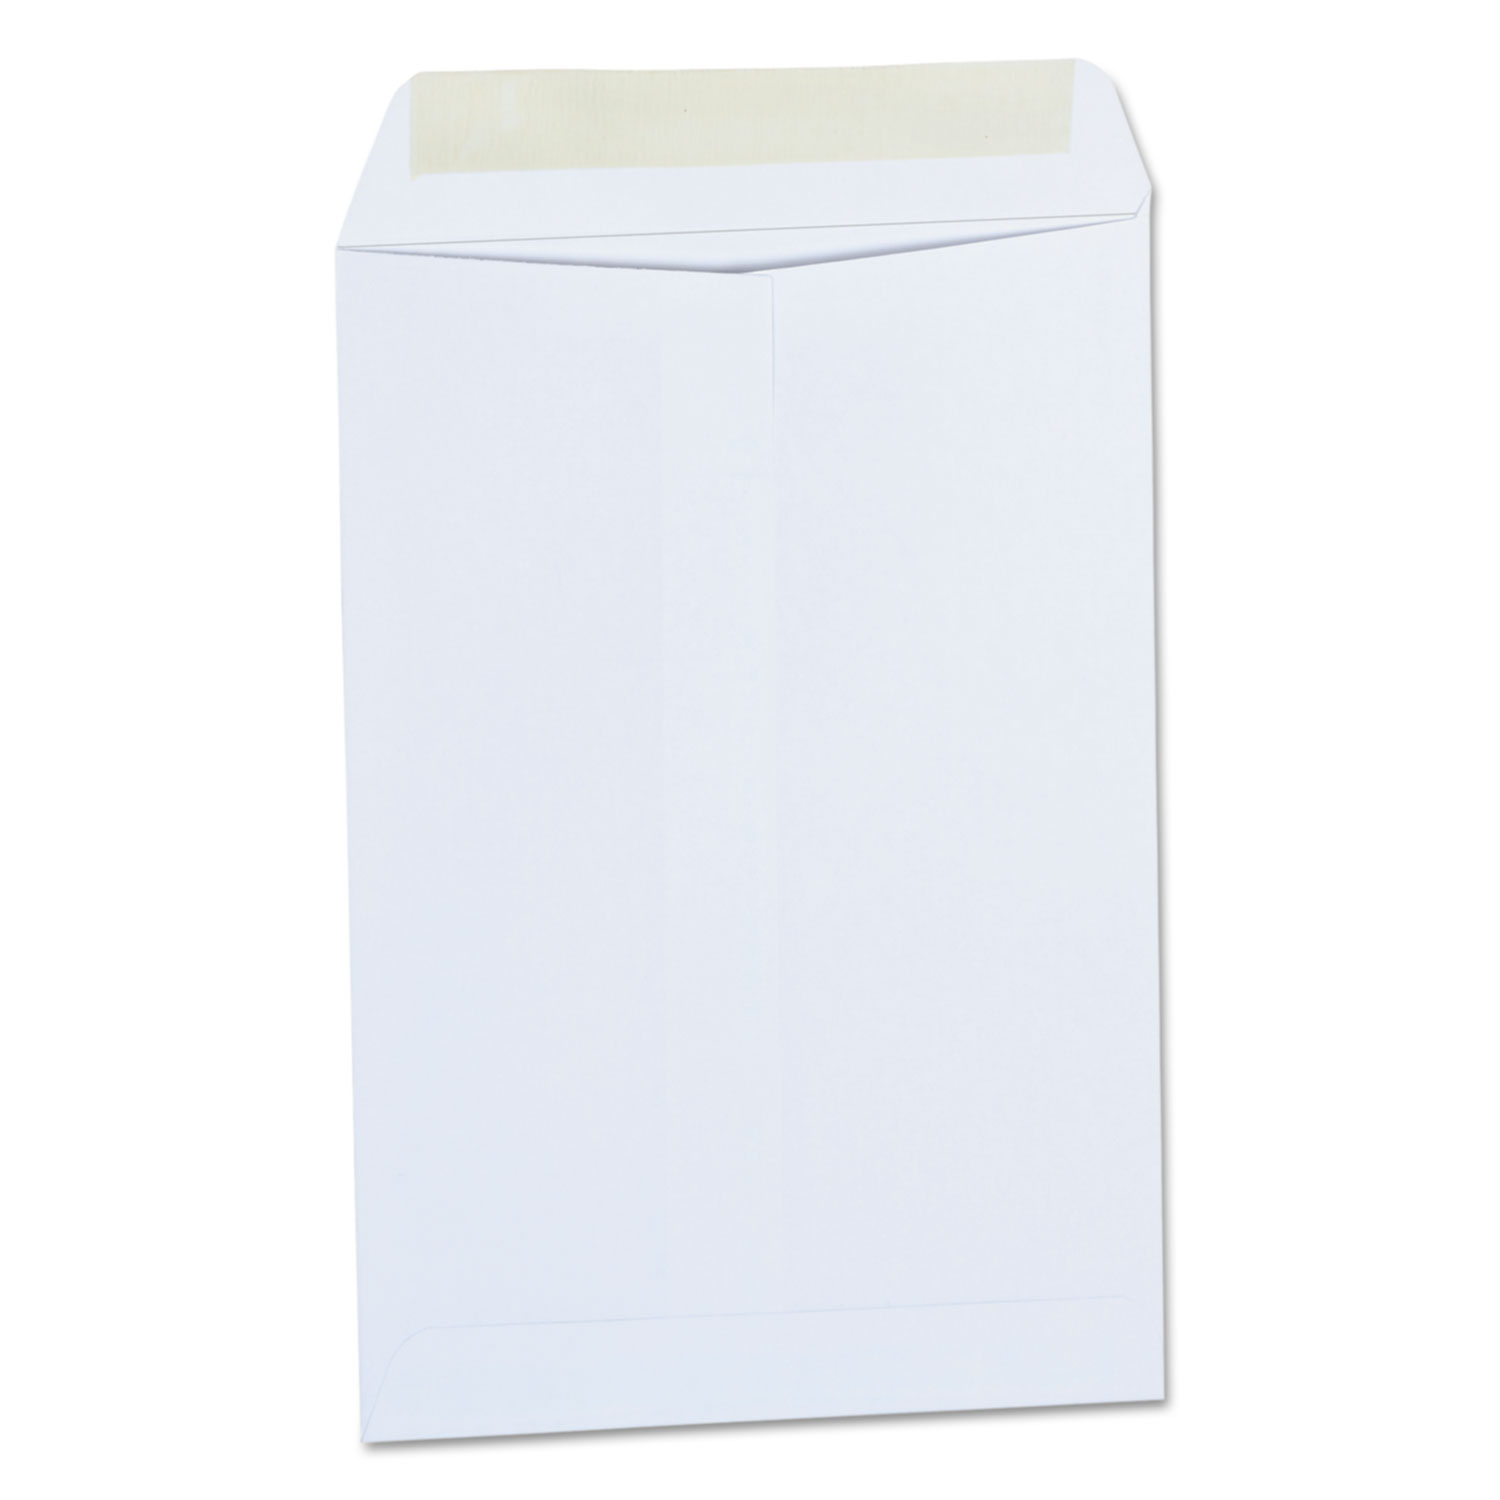  Universal UNV40104 Catalog Envelope, #1 3/4, Square Flap, Gummed Closure, 6.5 x 9.5, White, 500/Box (UNV40104) 